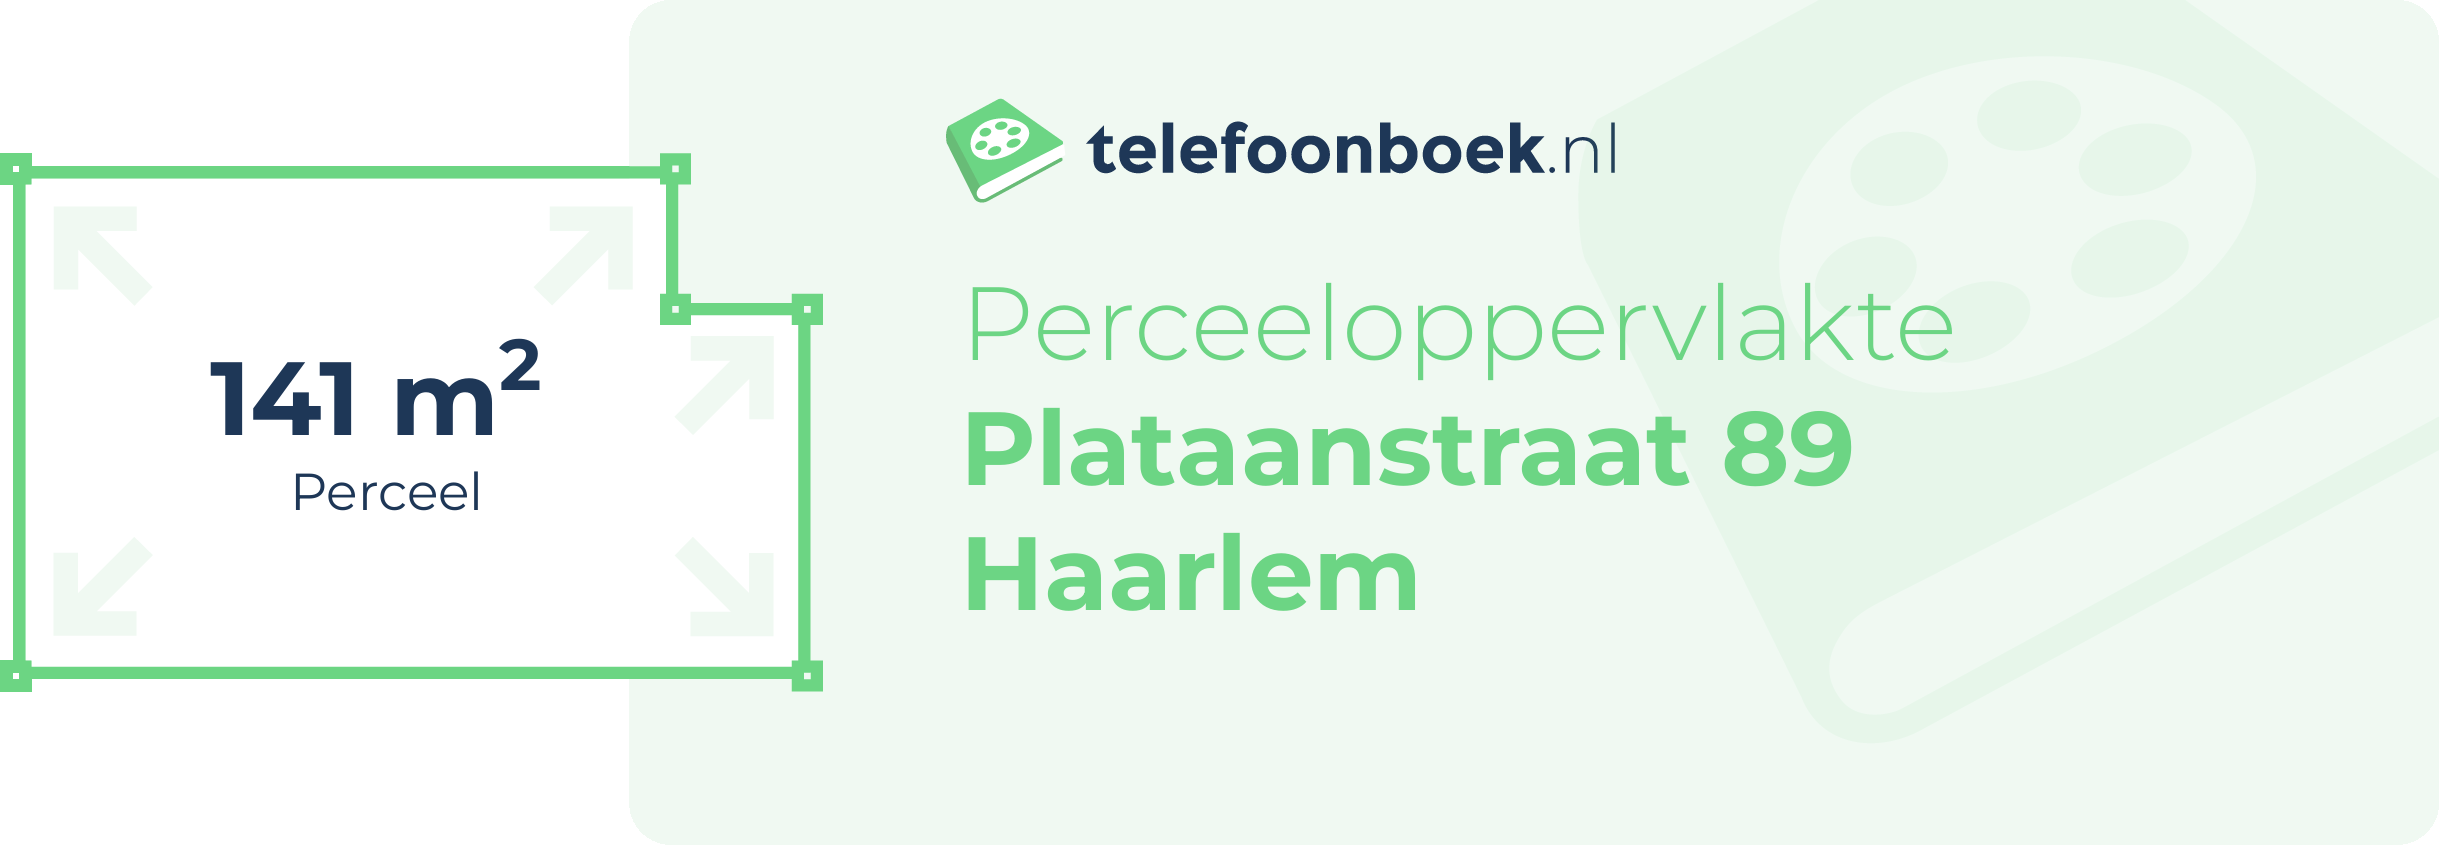 Perceeloppervlakte Plataanstraat 89 Haarlem